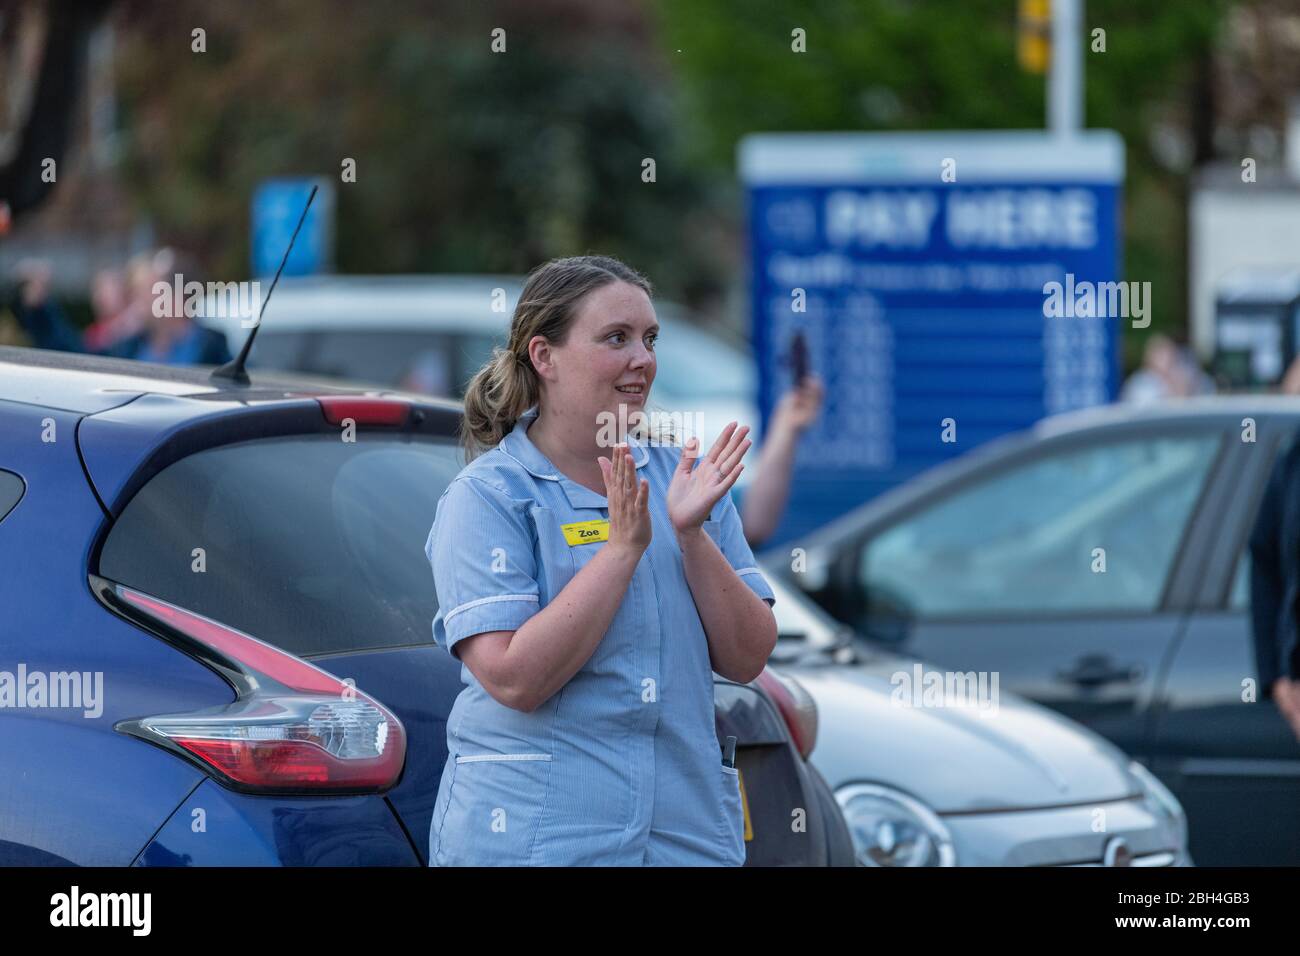 Clap for the NHS at Cheltenham General Hospital during the coronavirus pandemic, UK. Stock Photo